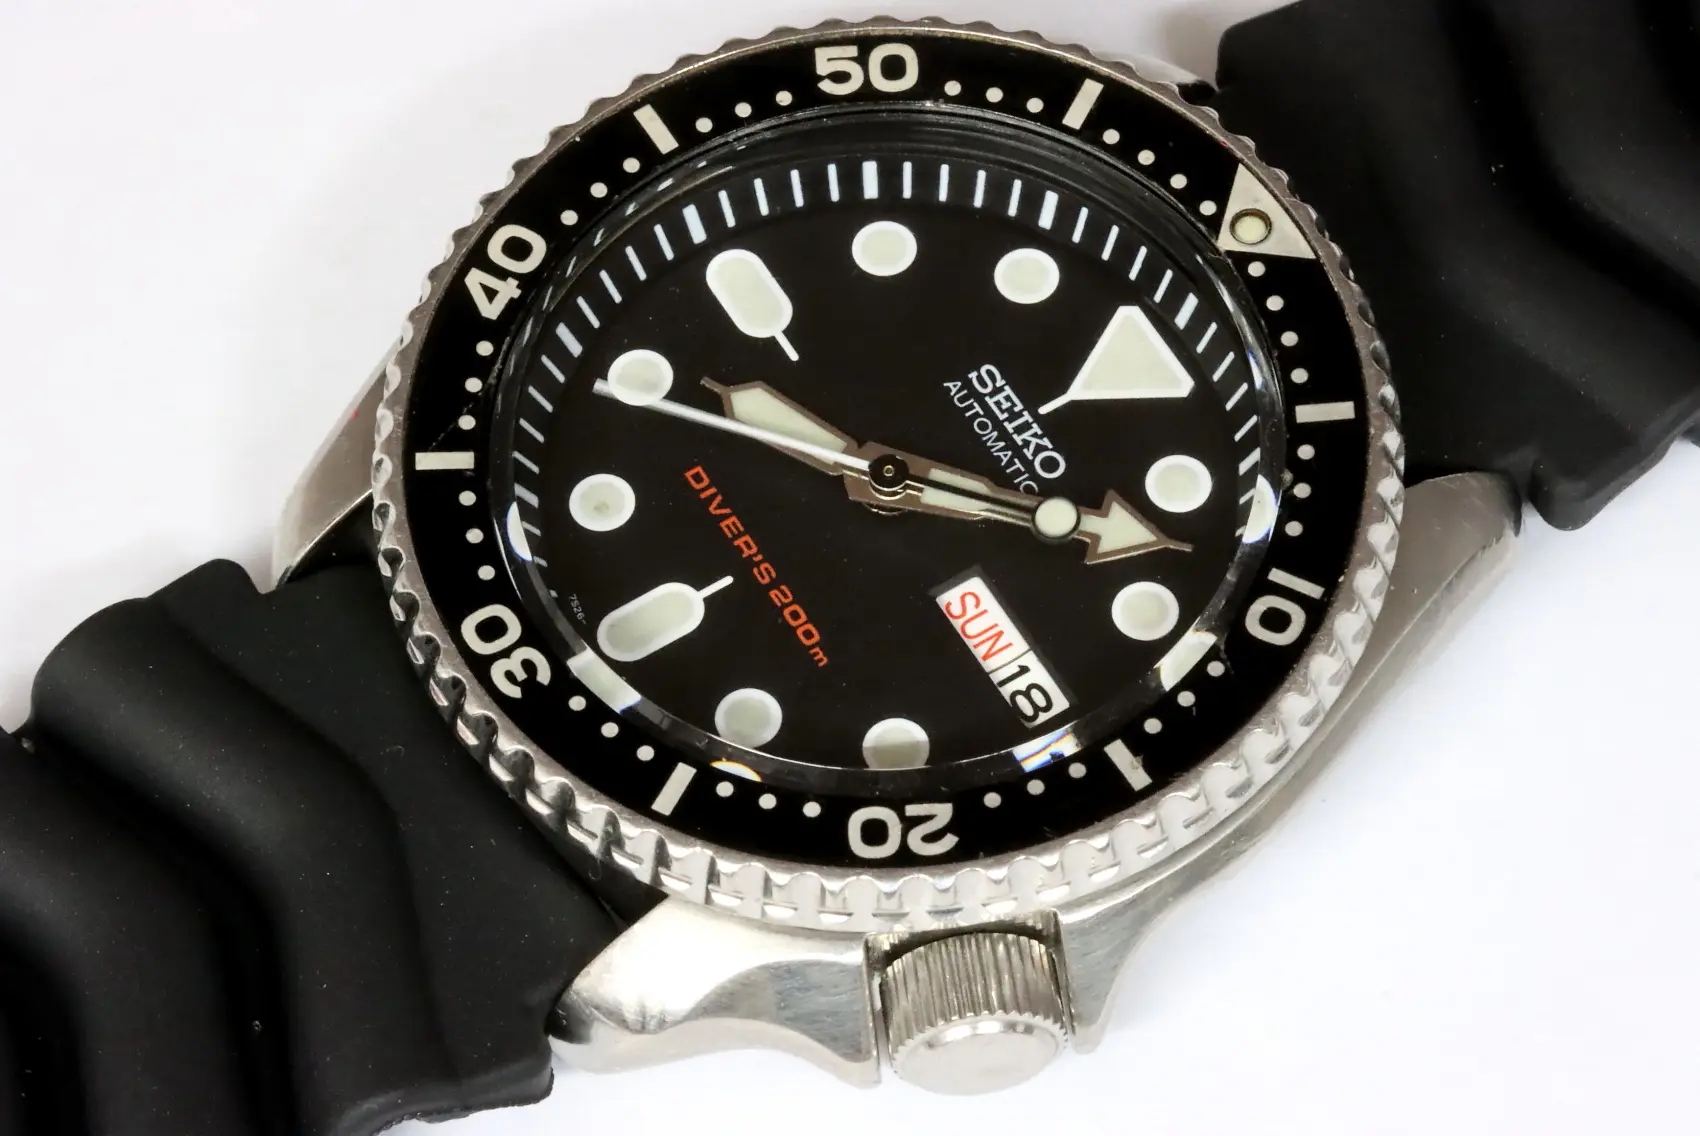 Seiko 7S26-0020 SKX007 automatic diver's watch